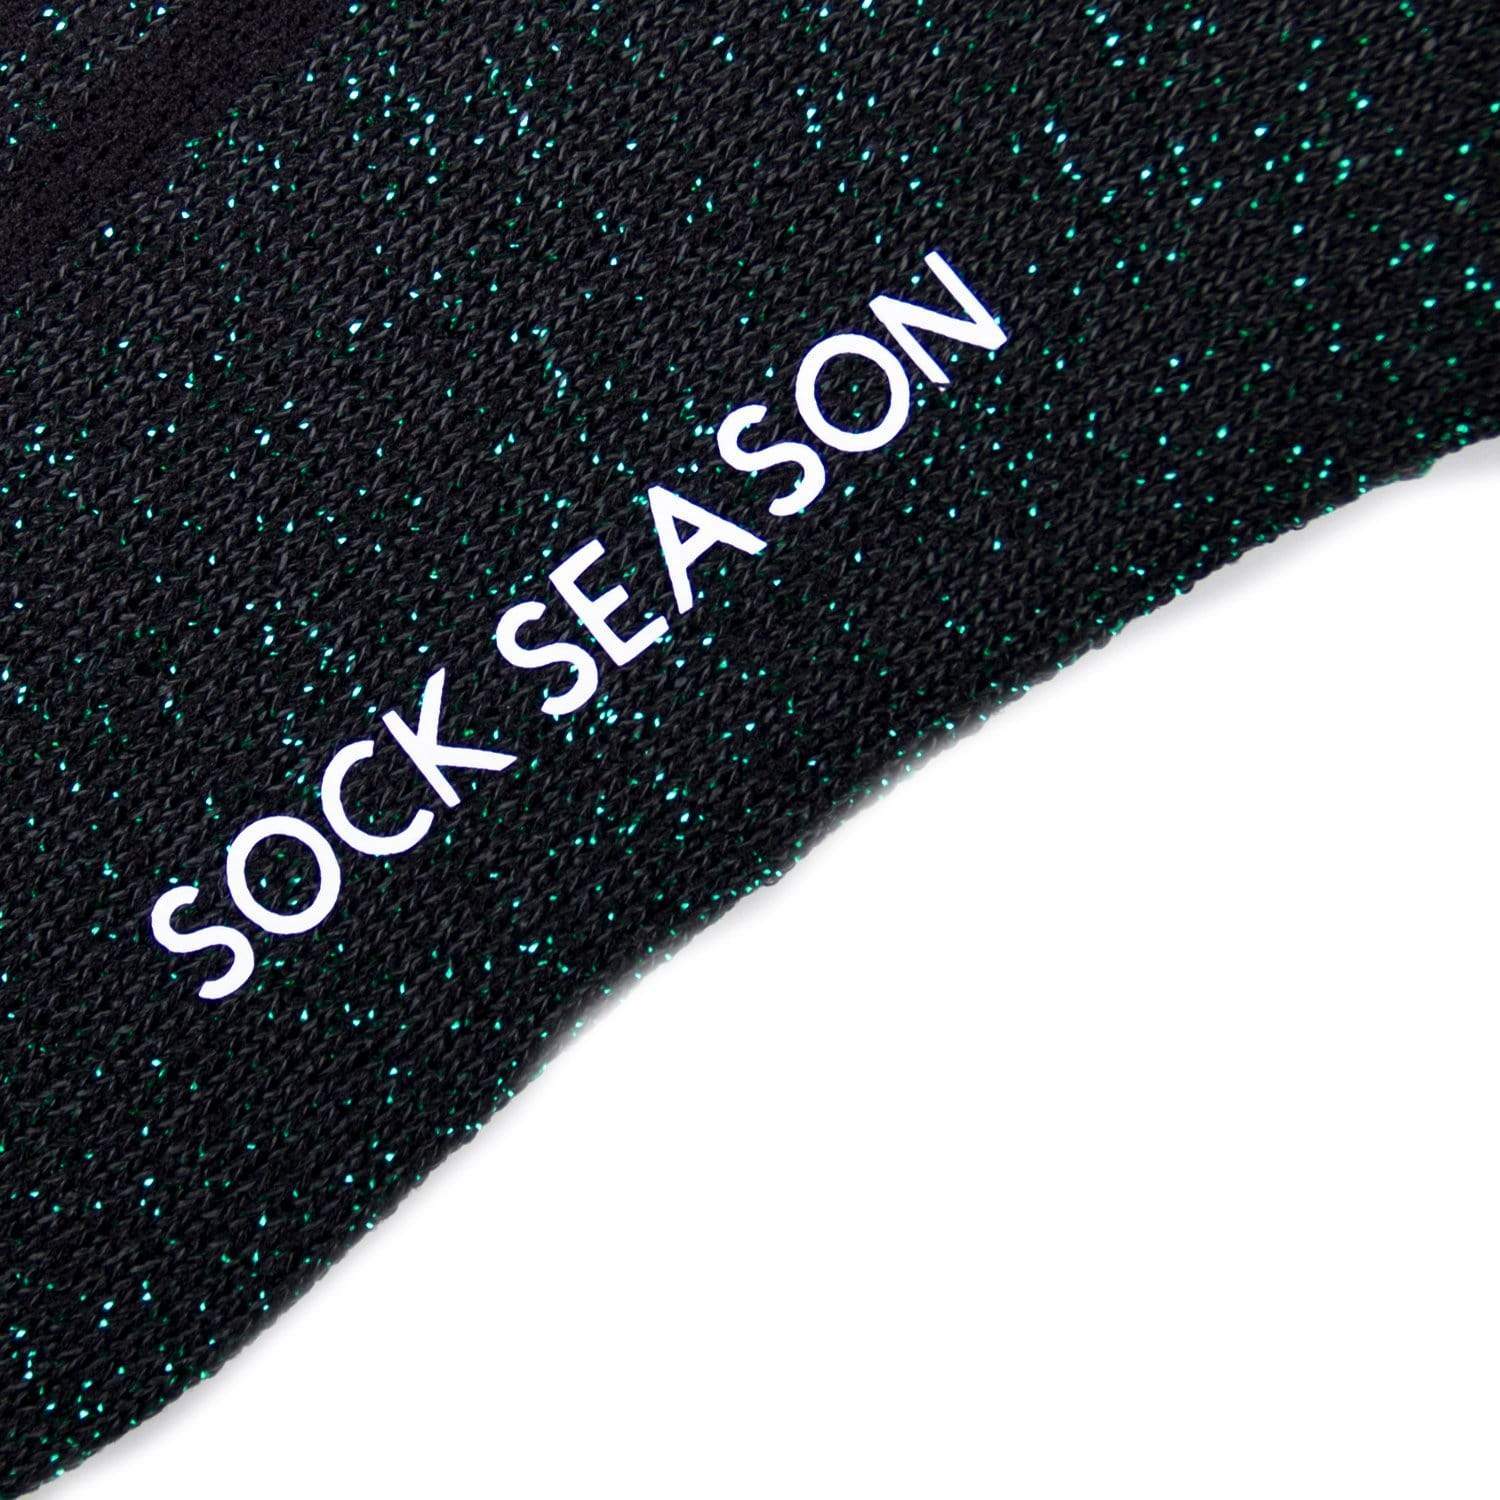 Aliyah Scallop Sparkle Crew Sock | Green - Sock Season